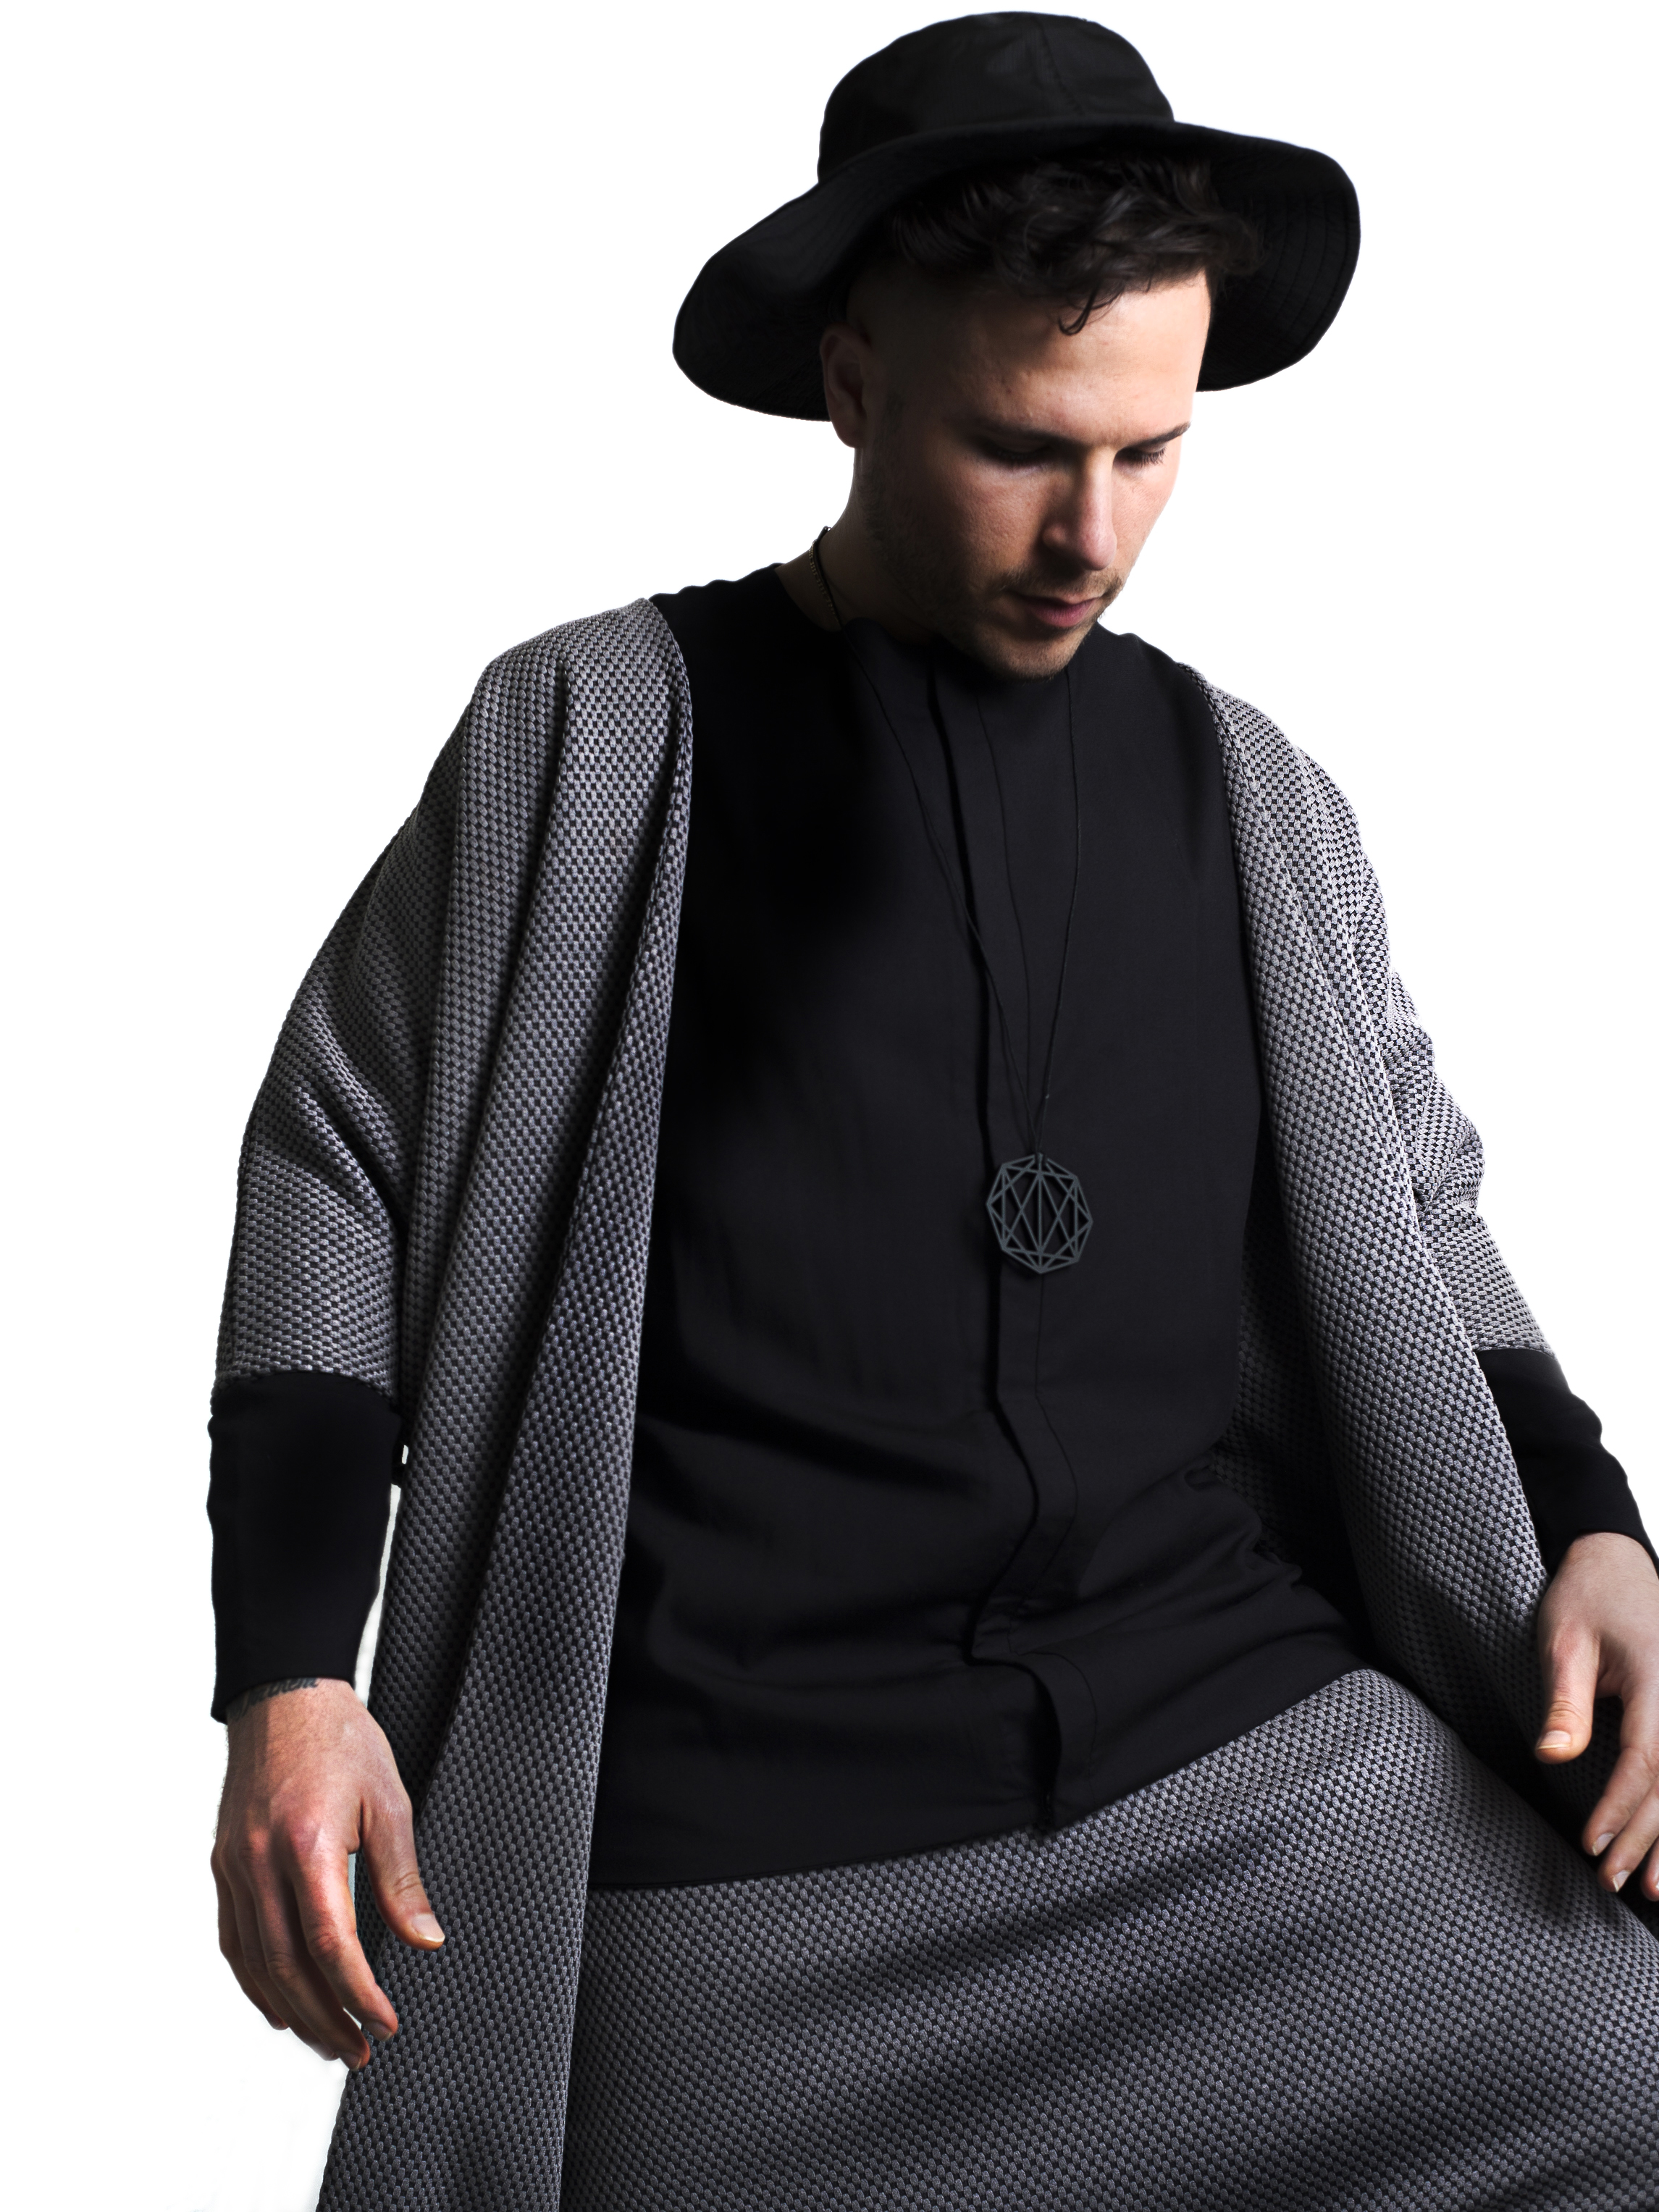 zaramia-ava-zaramiaava-leeds-fashion-designer-ethical-sustainable-tailored-minimalist-editorial-print-black-hareem-tshirt-versatile-drape-cowl-styling-studio-menswear-models-photoshoot-black-white-trousers-hat-monochrome-9.jpg